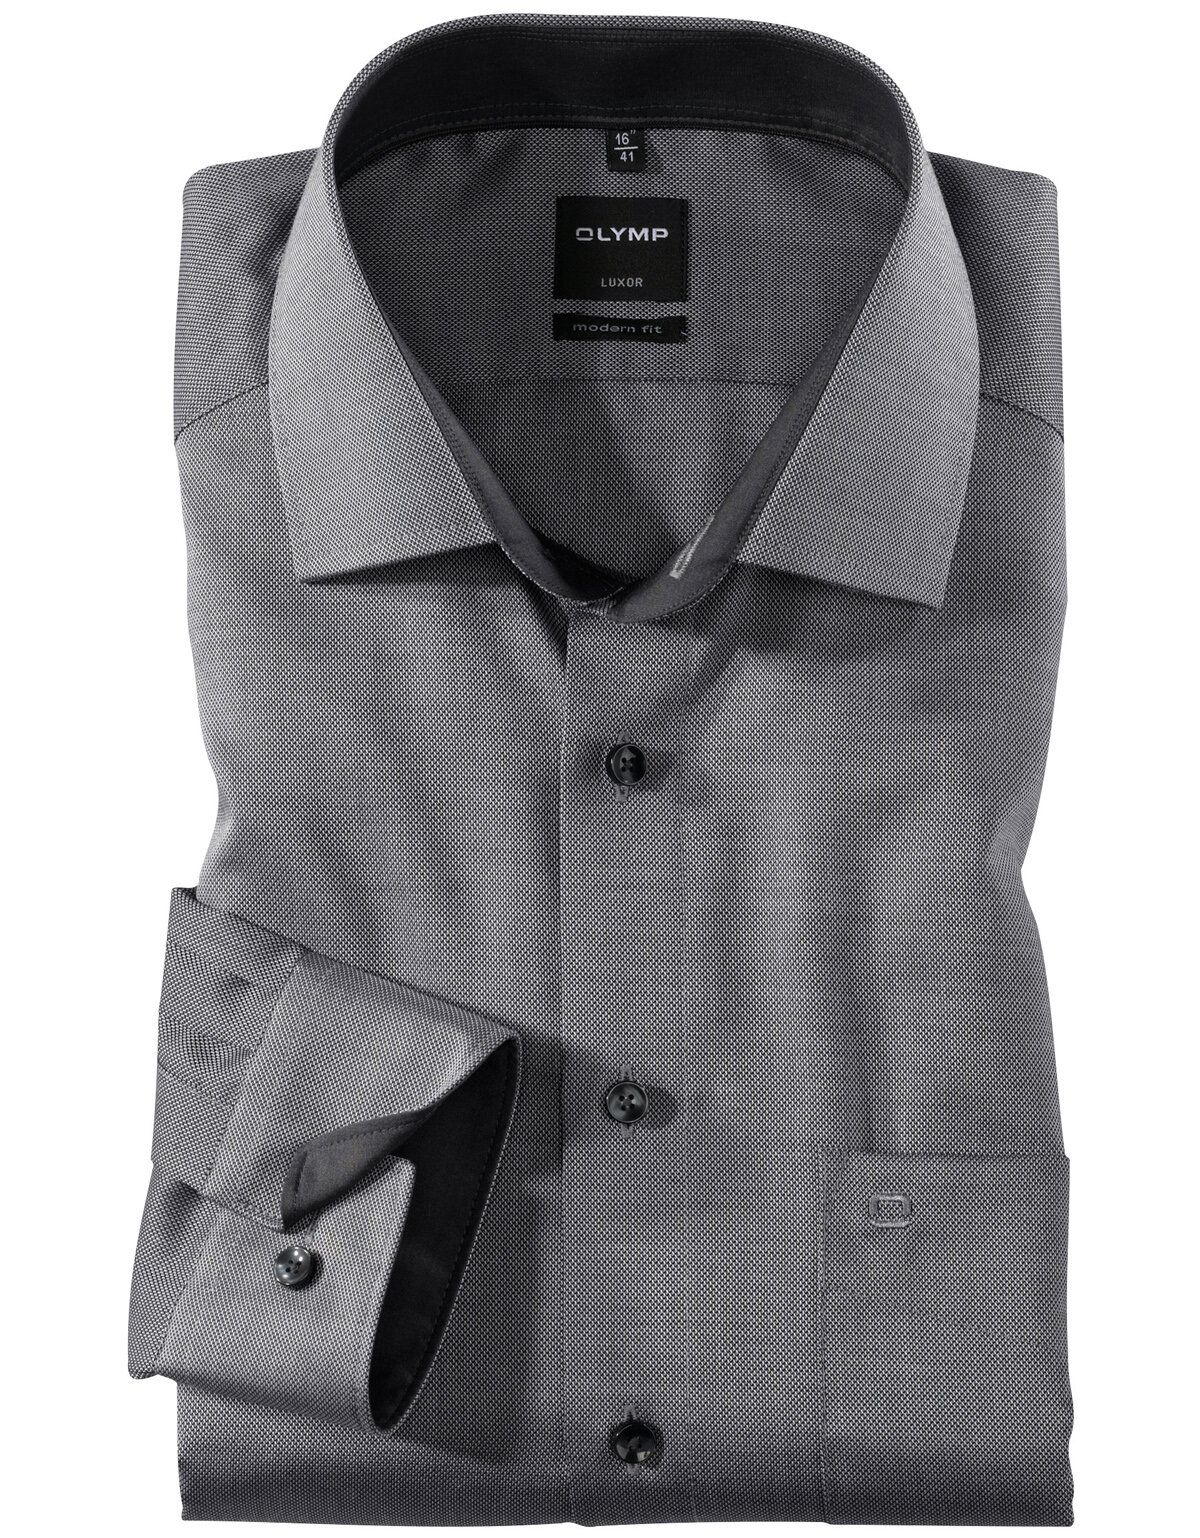 Деловая рубашка OLYMP Modern fit, фактурная ткань[ЧЕРНЫЙ]